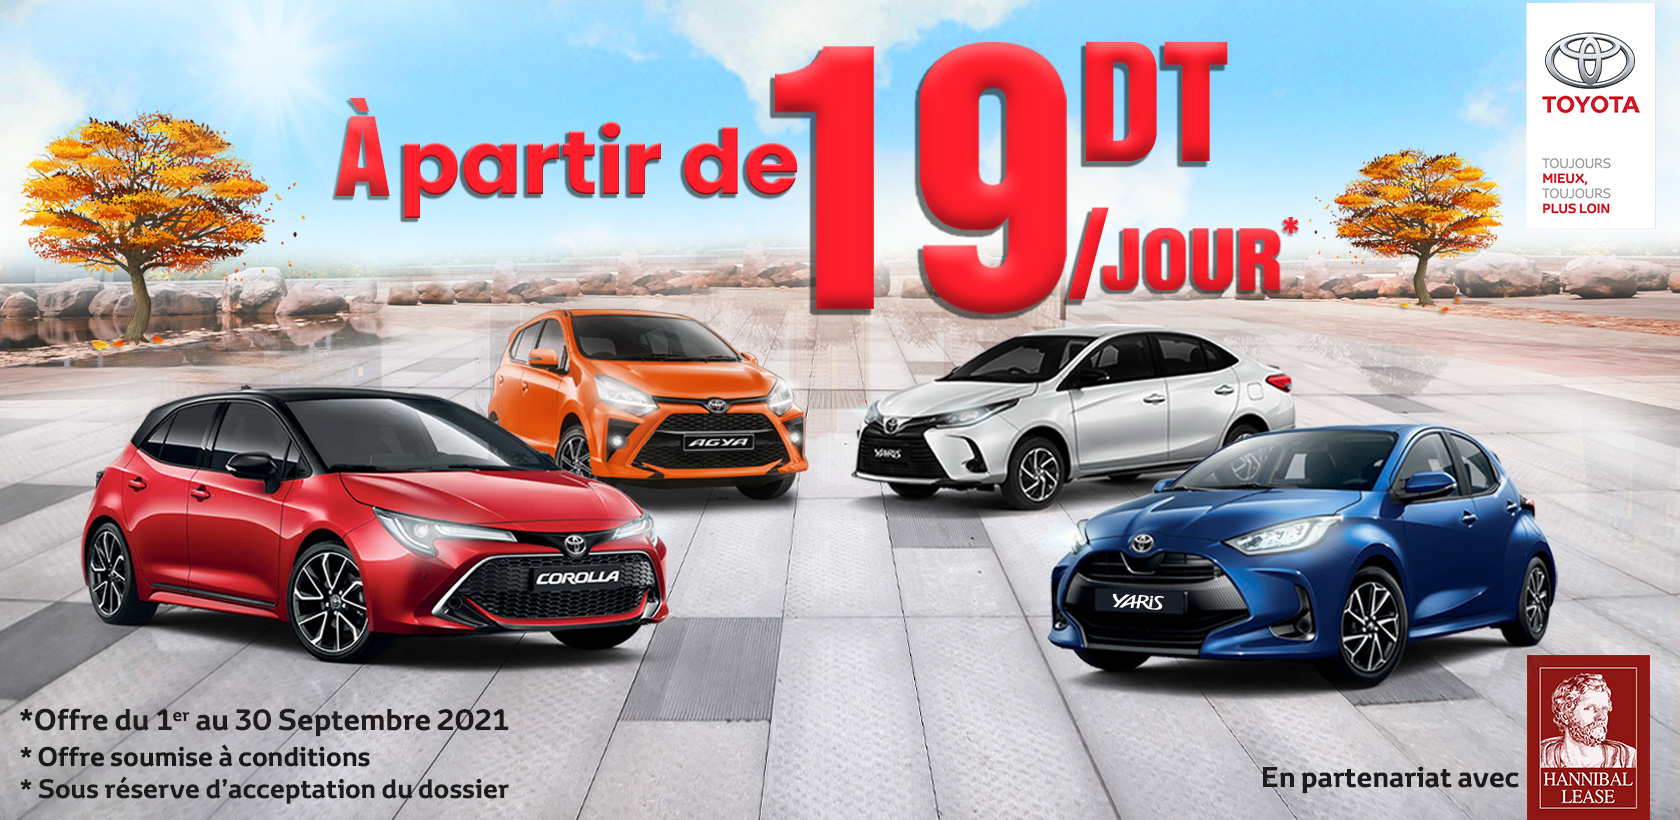 Toyota Tunisie & Hannibal Lease